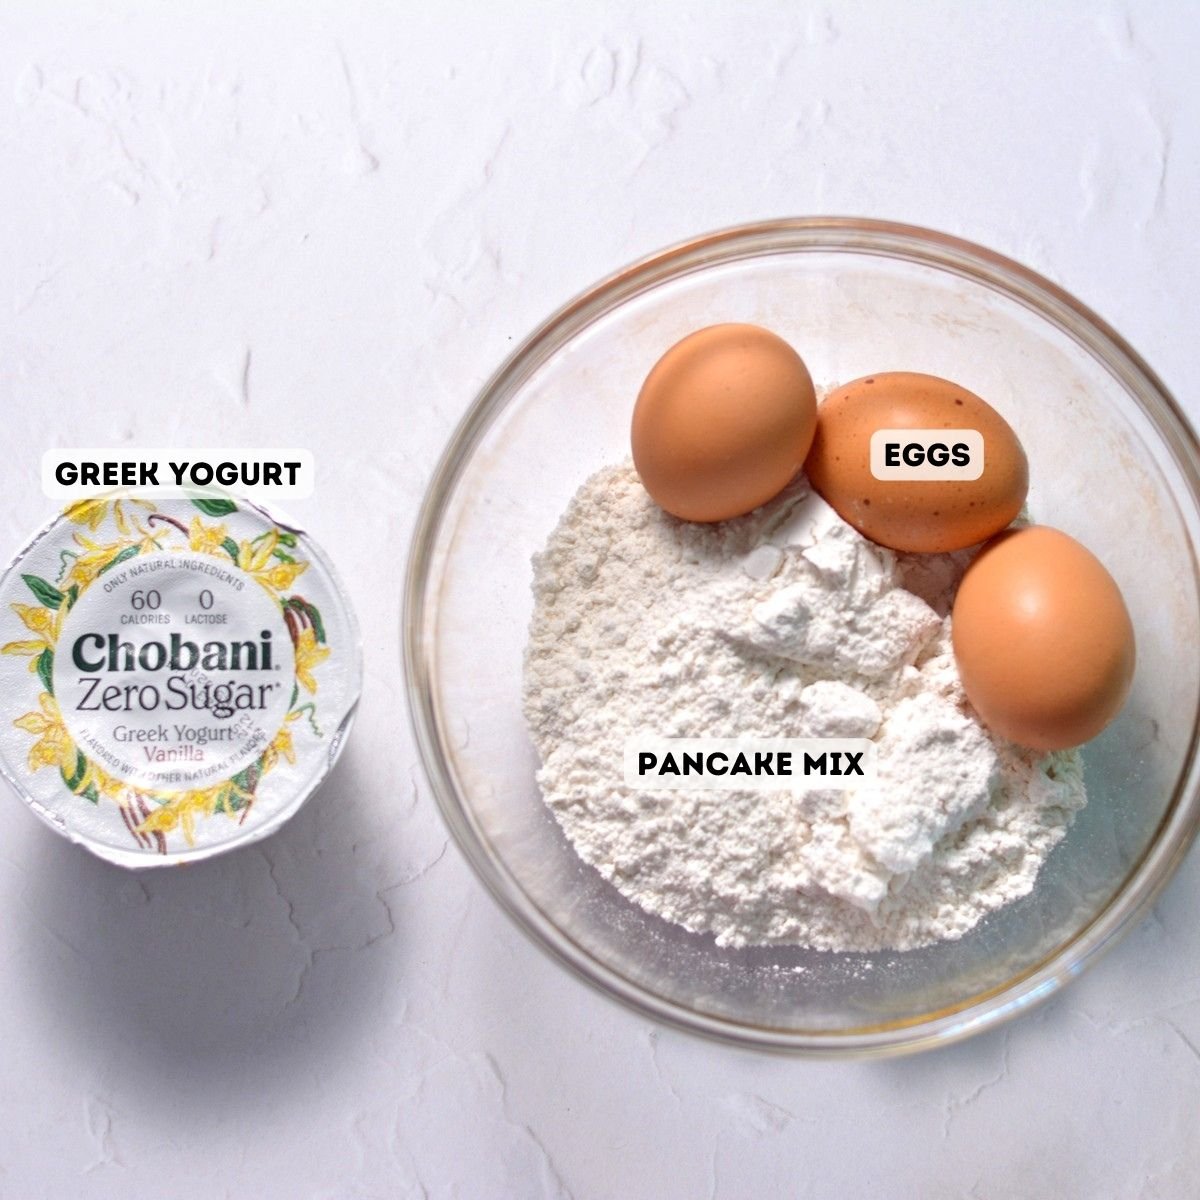 Ingredients including pancake mix, eggs, and vanilla greek yogurt.